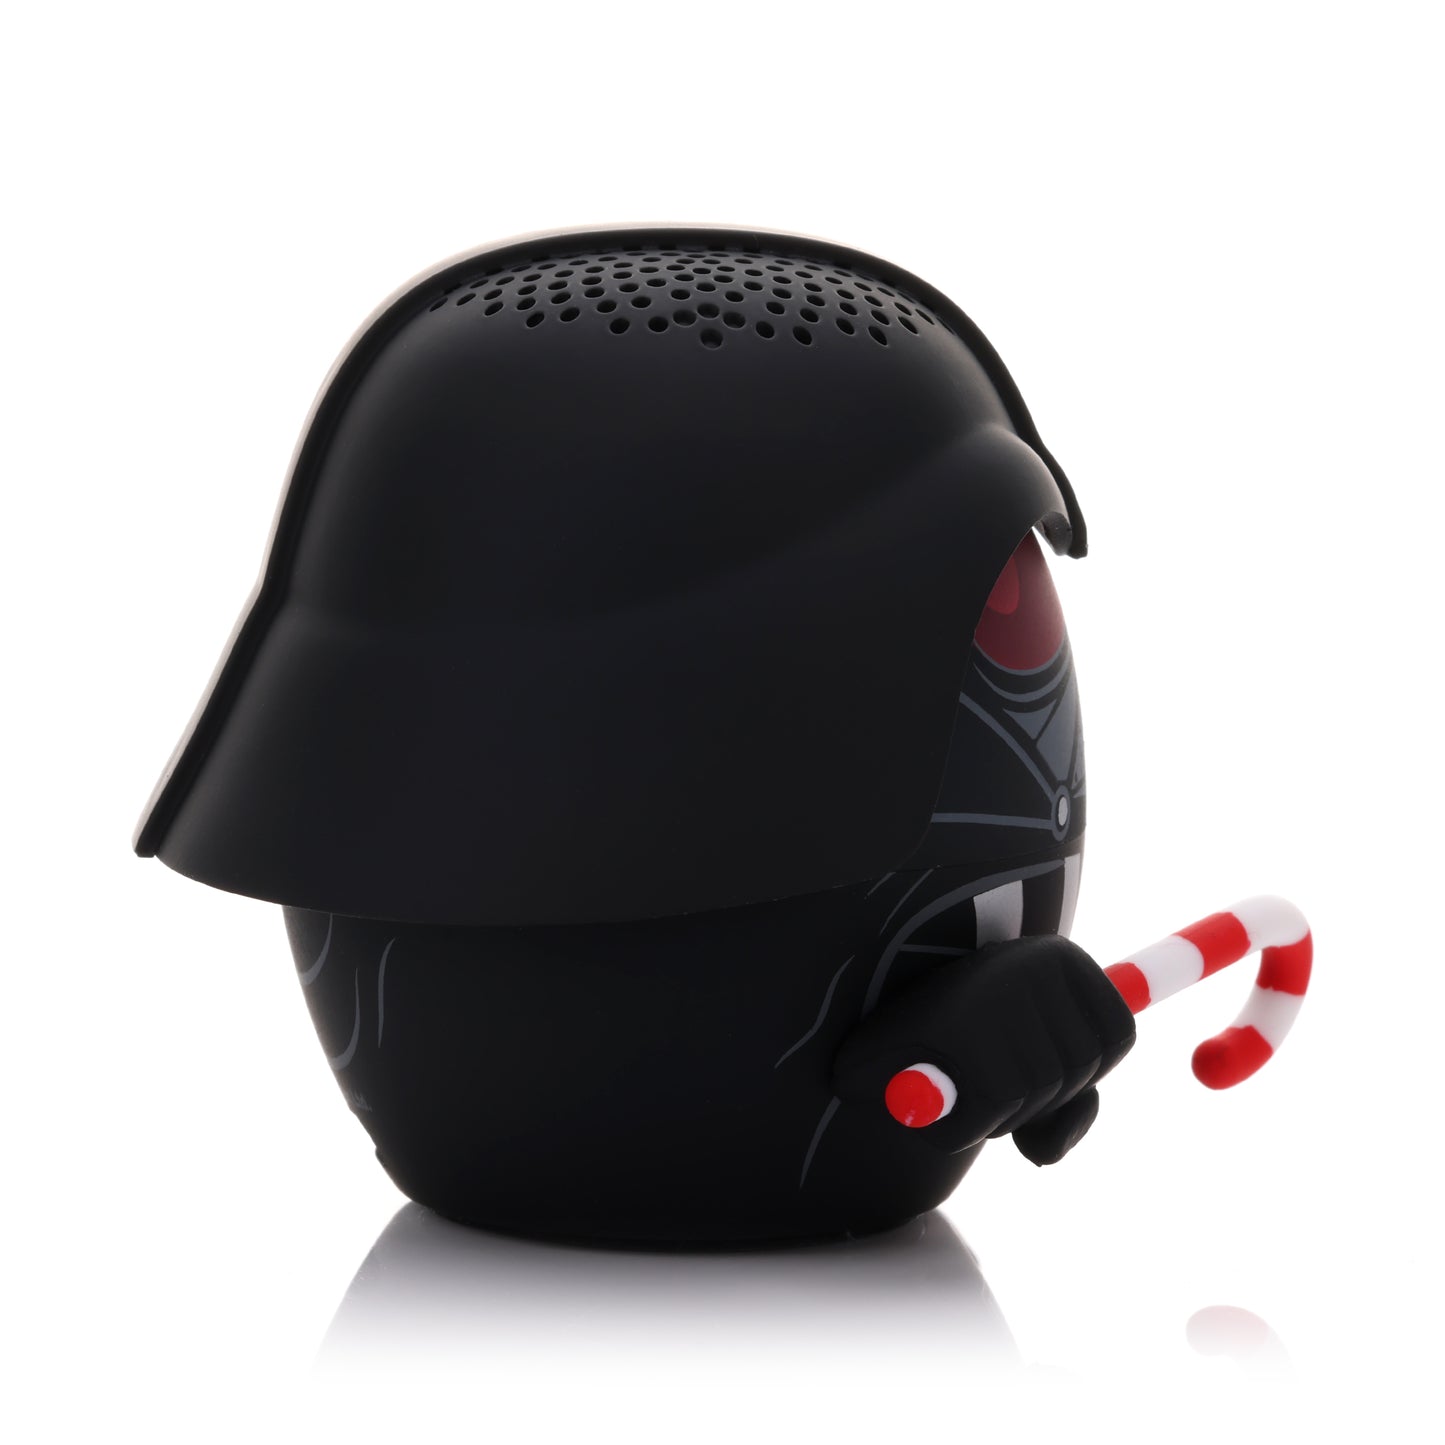 Darth Vader w/ Candy Cane